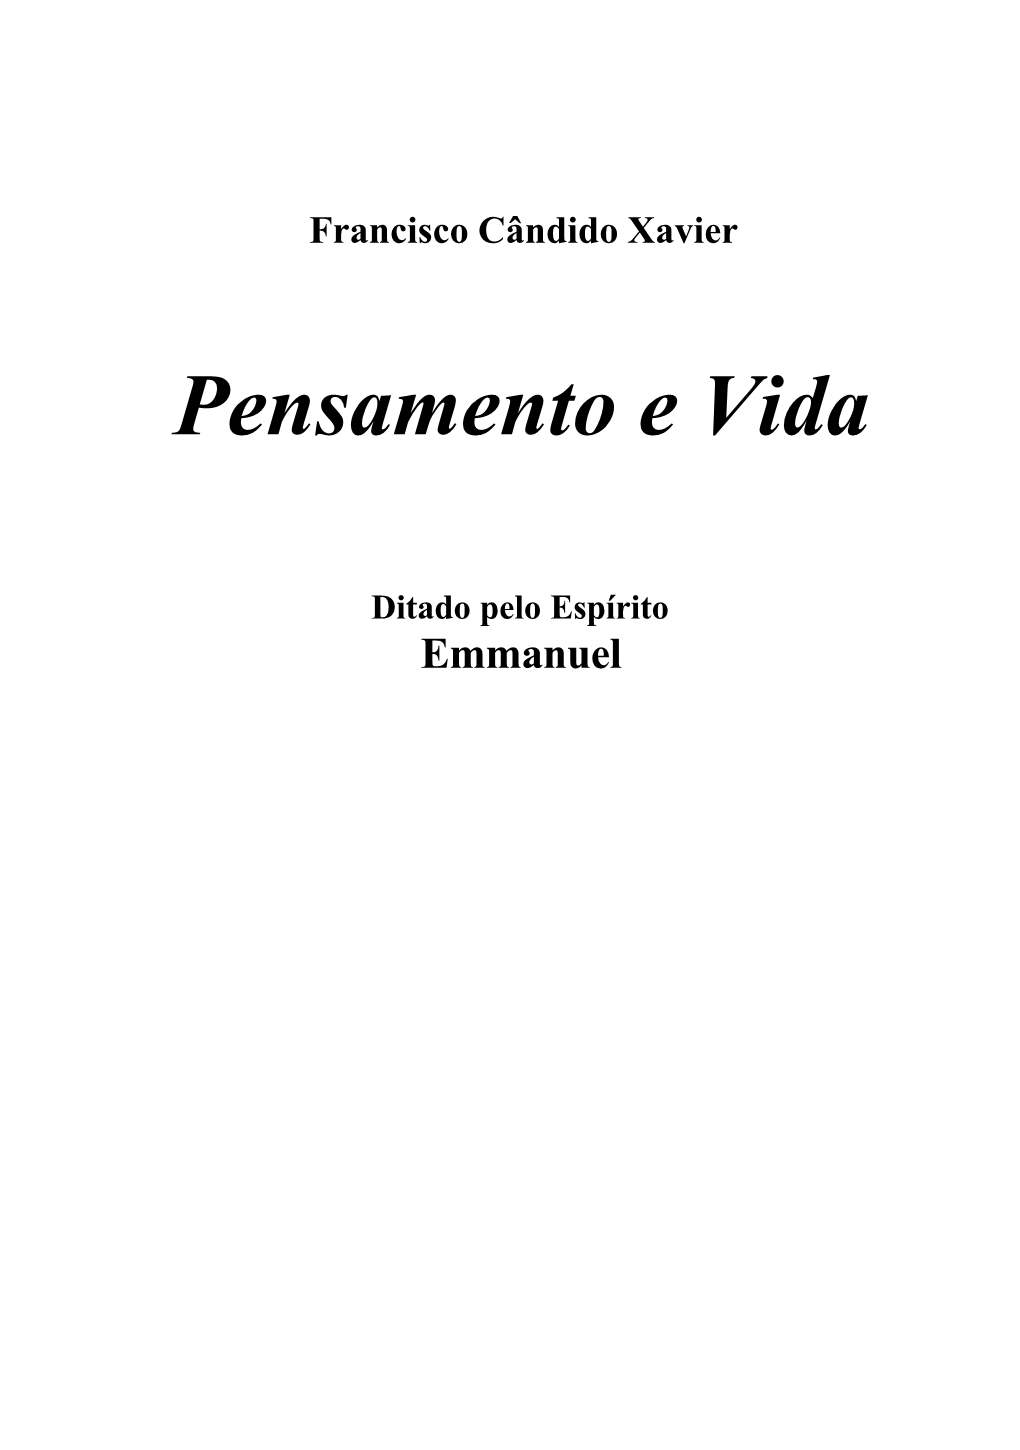 Emmanuel Francisco Cândido Xavier - Pensamento E Vida - Pelo Espírito Emmanuel 2